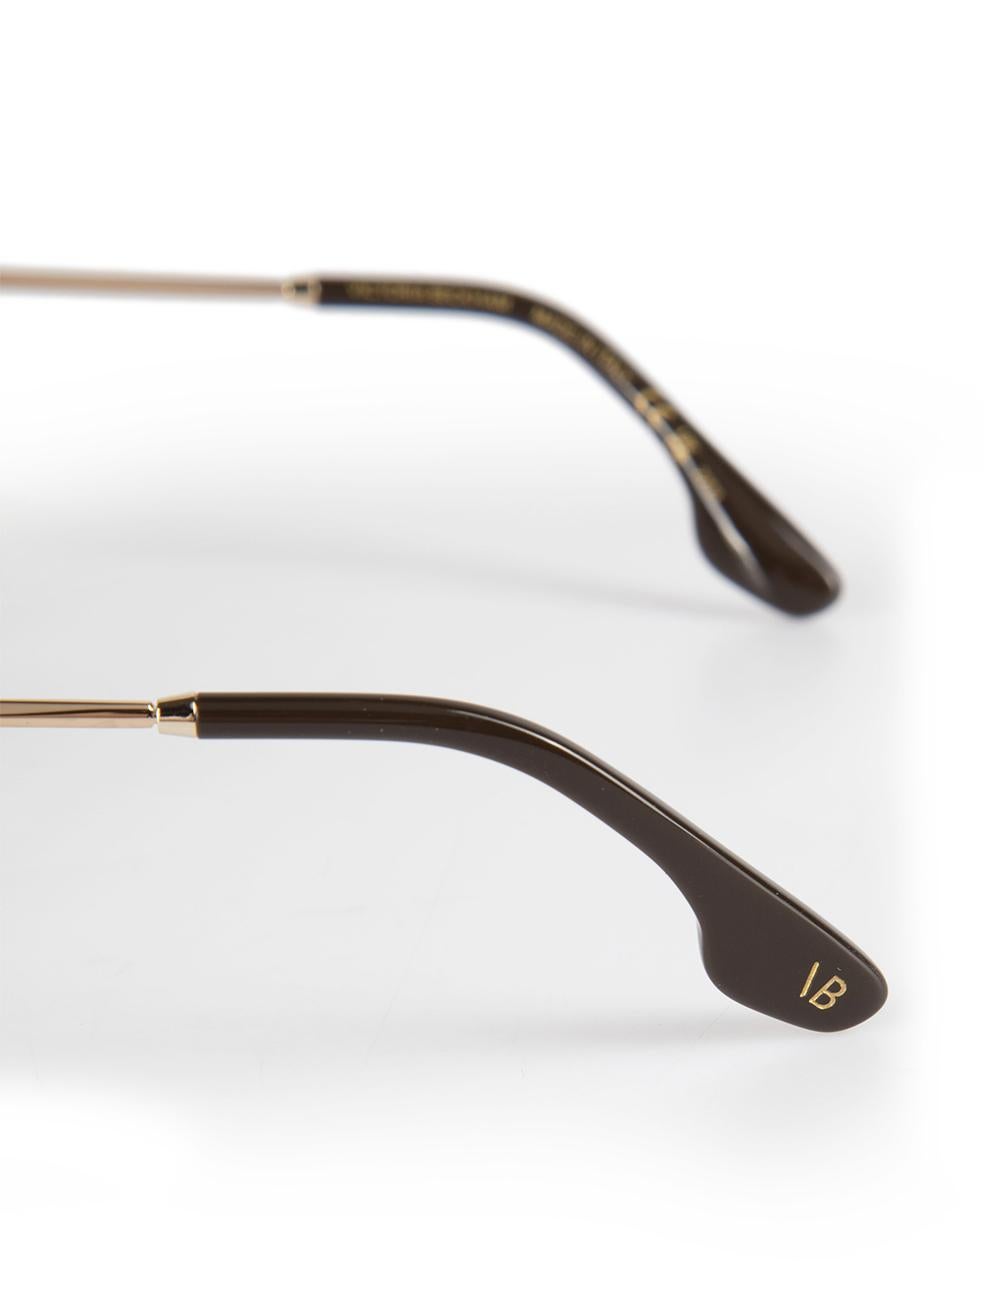 Victoria Beckham Mocha Navigator Frame Sunglasses For Sale 2